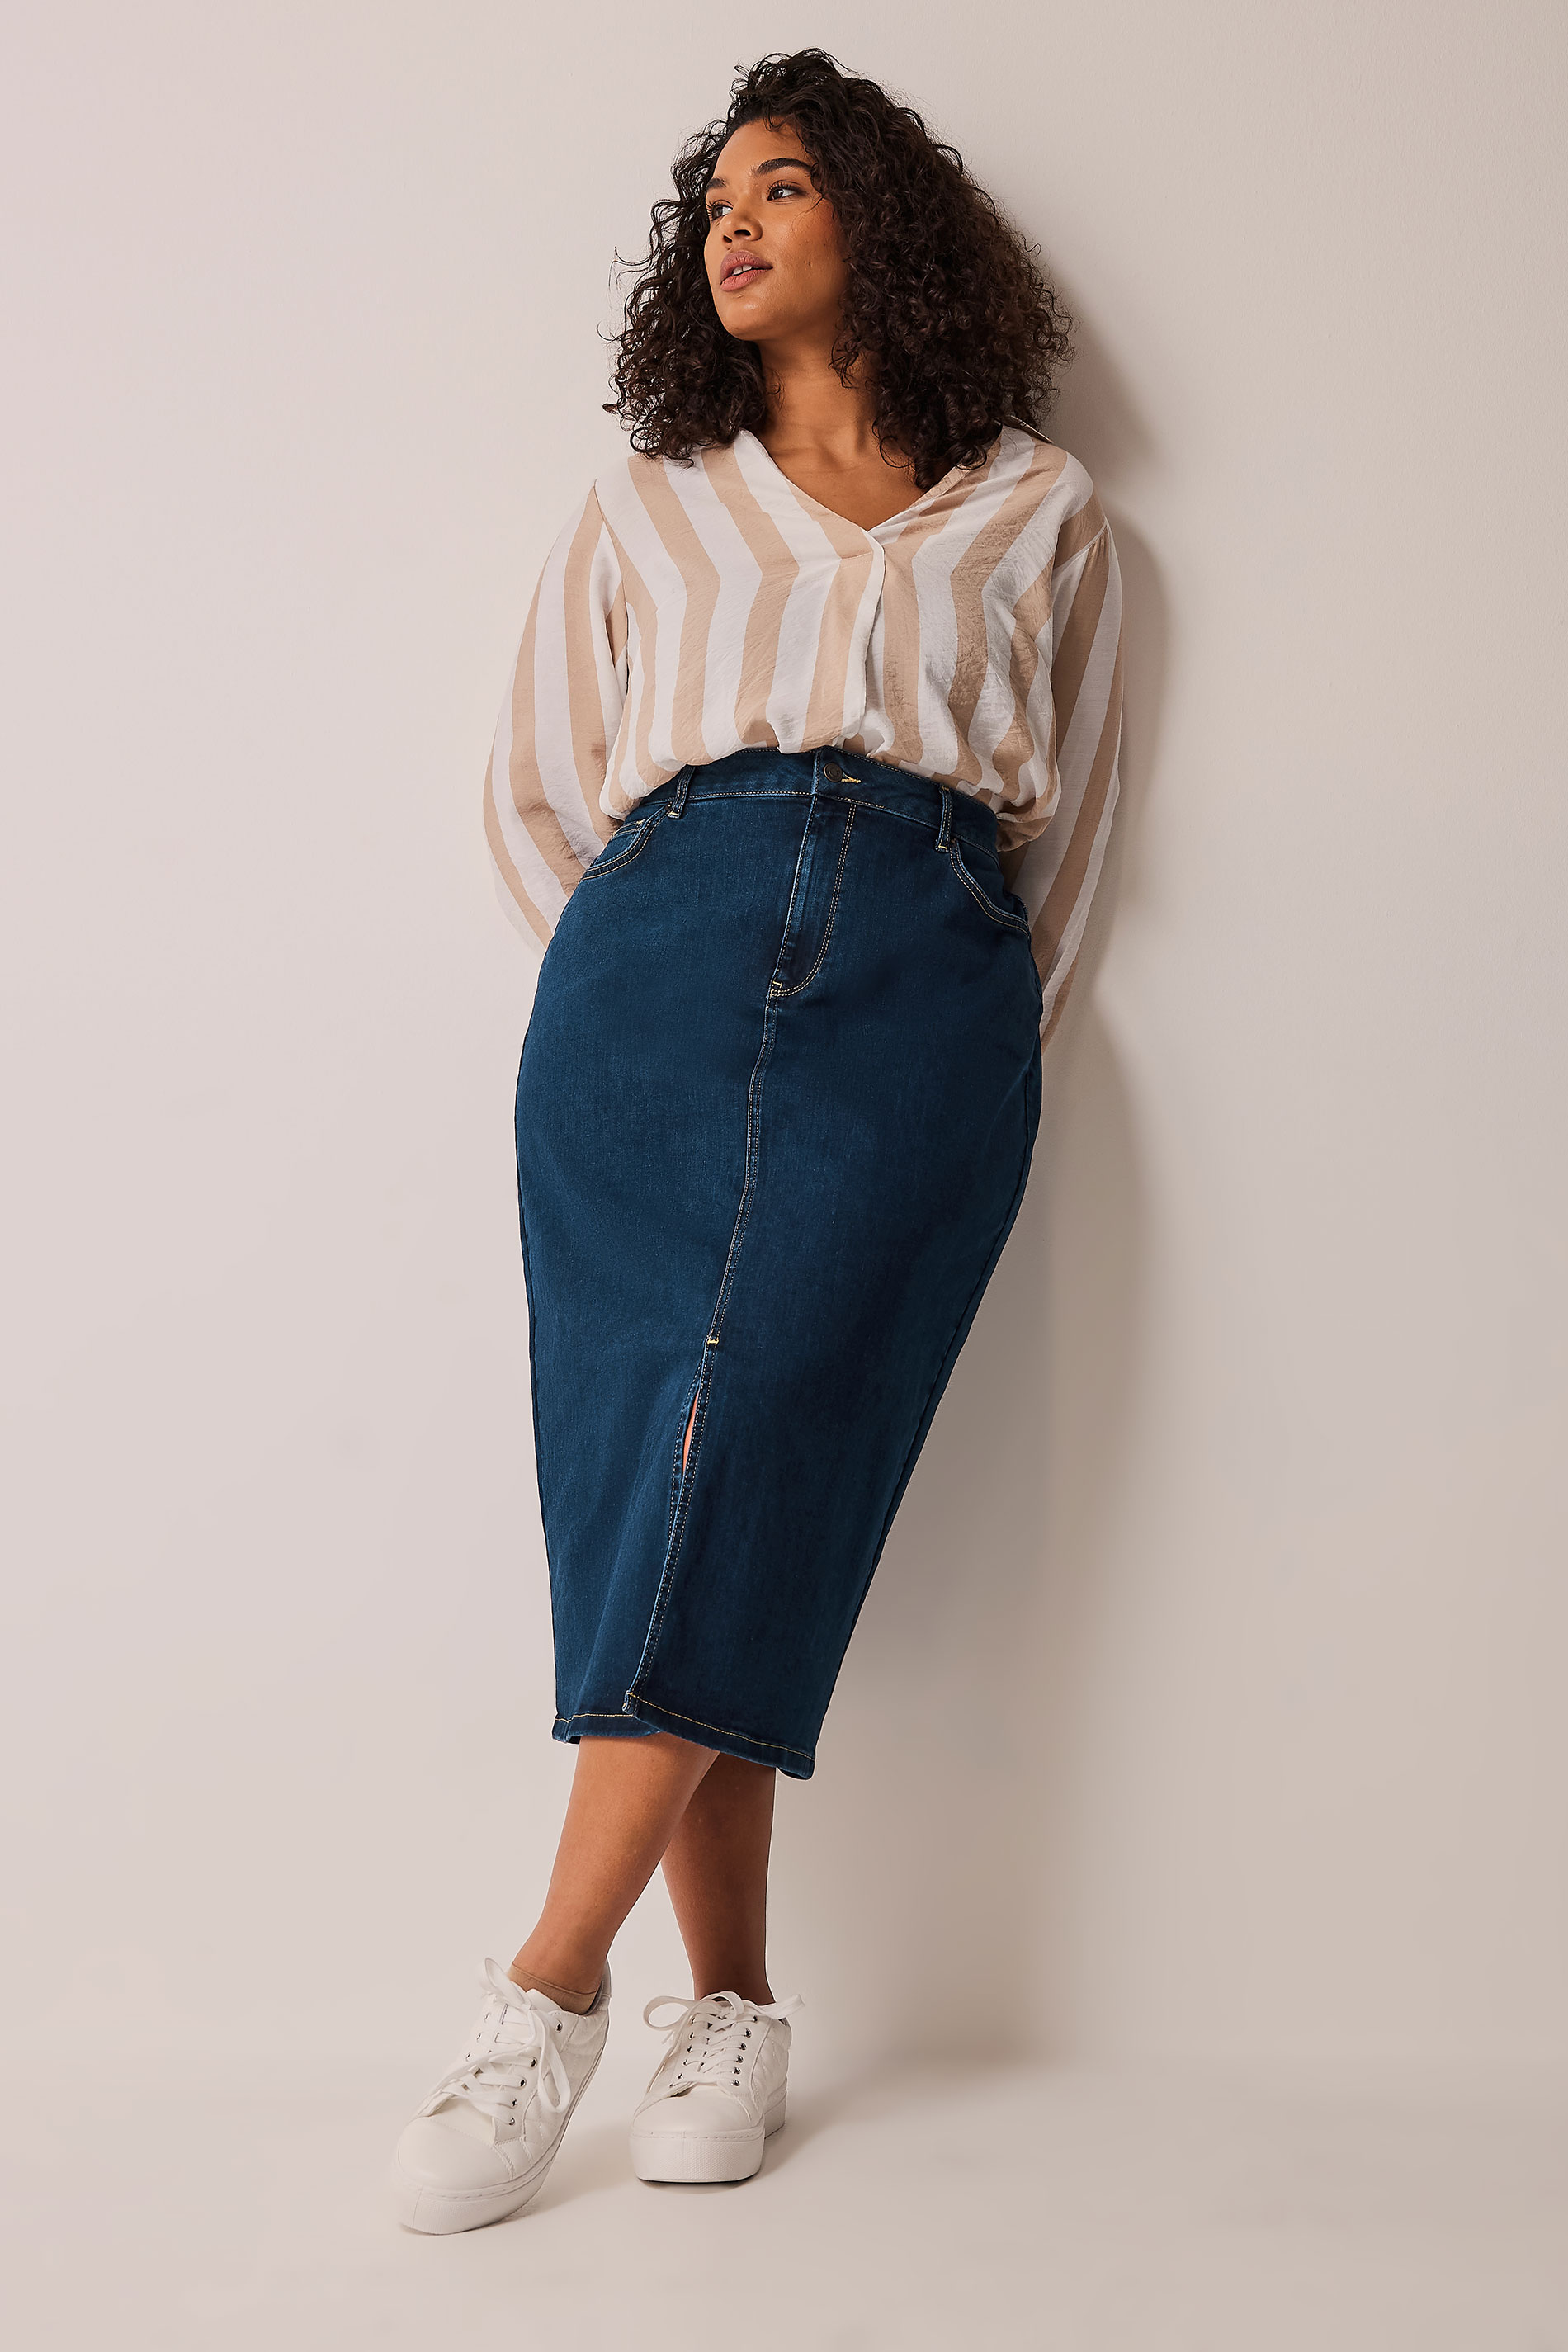 Plus Size Blue Wash Denim Skirt | Evans 2